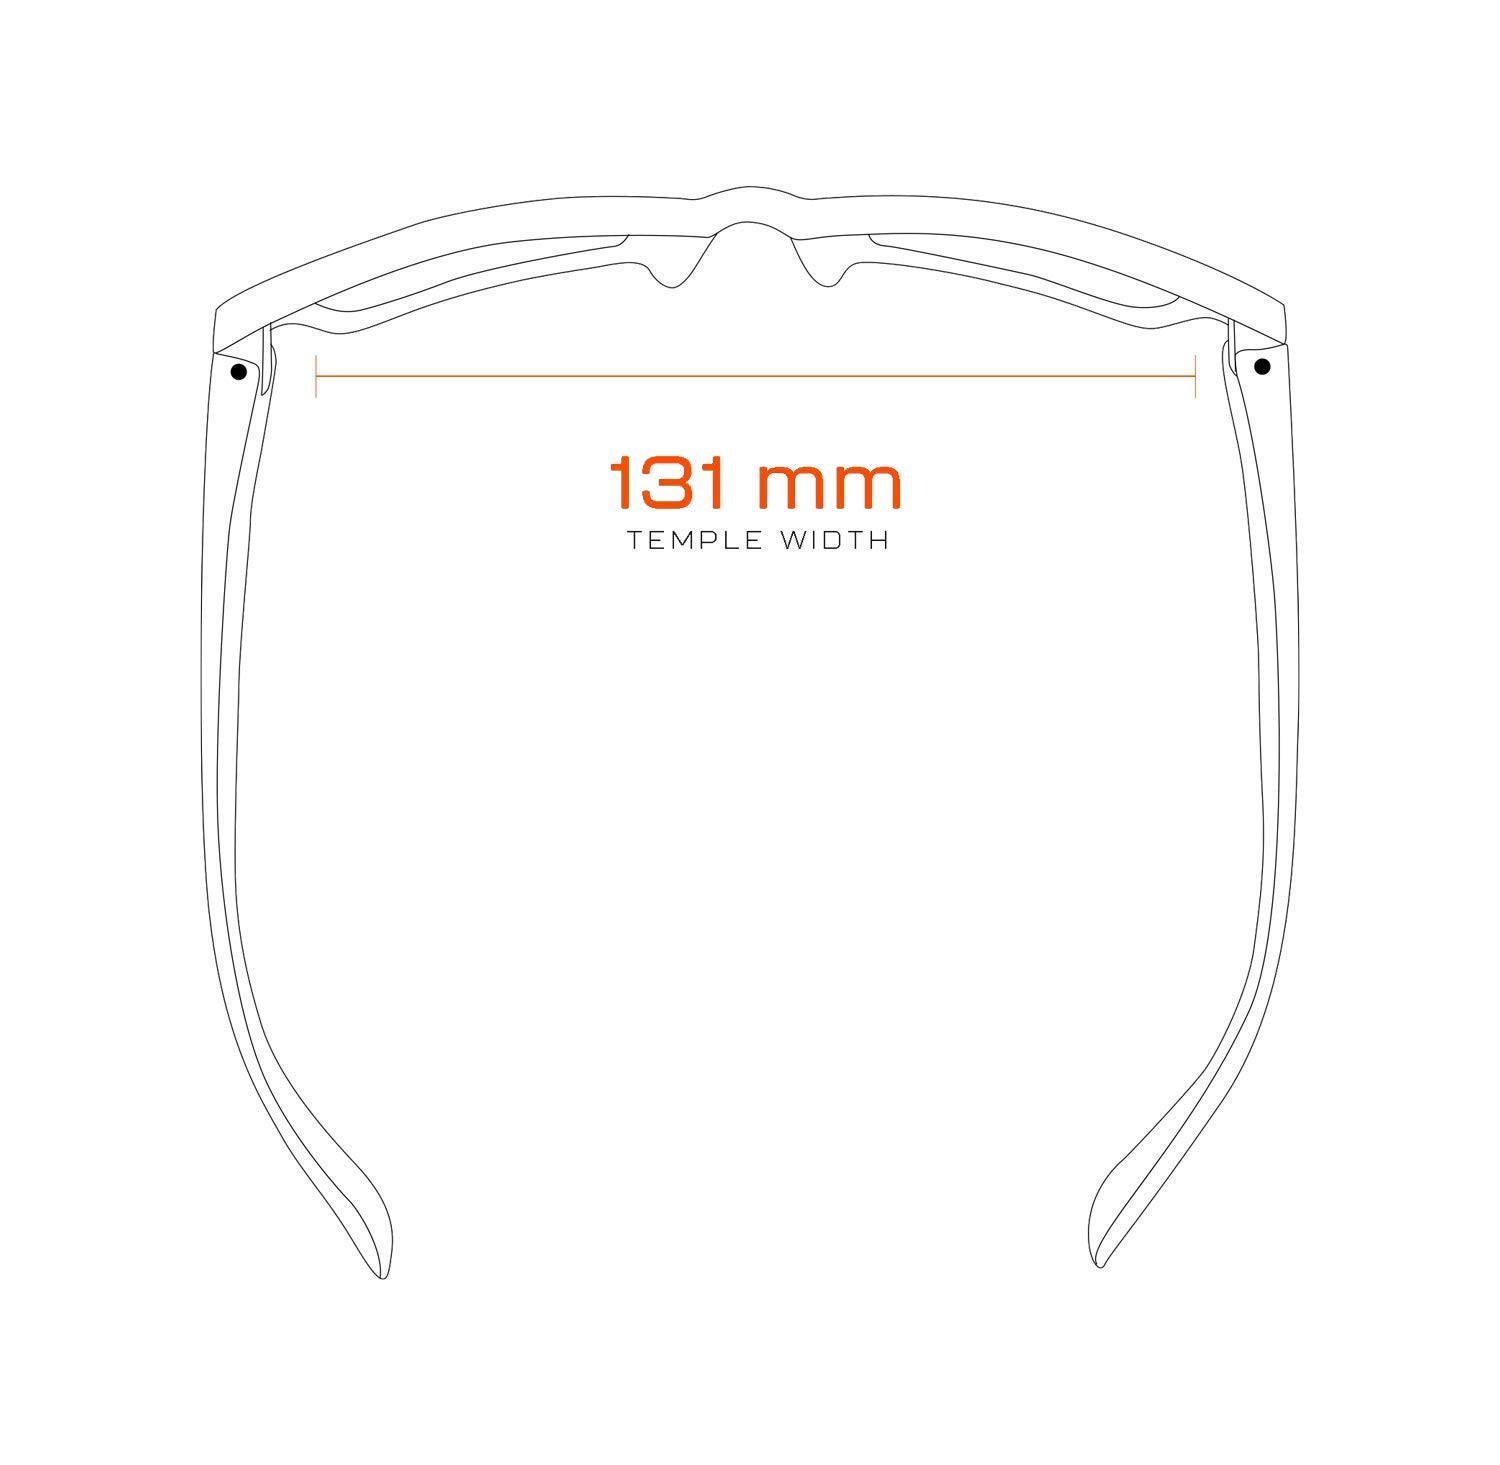 TOROE TR90 Square Frame Grade A Polarized Black Emblem Sunglasses with Anti Reflective Water Repellent Polycarbonate Lenses